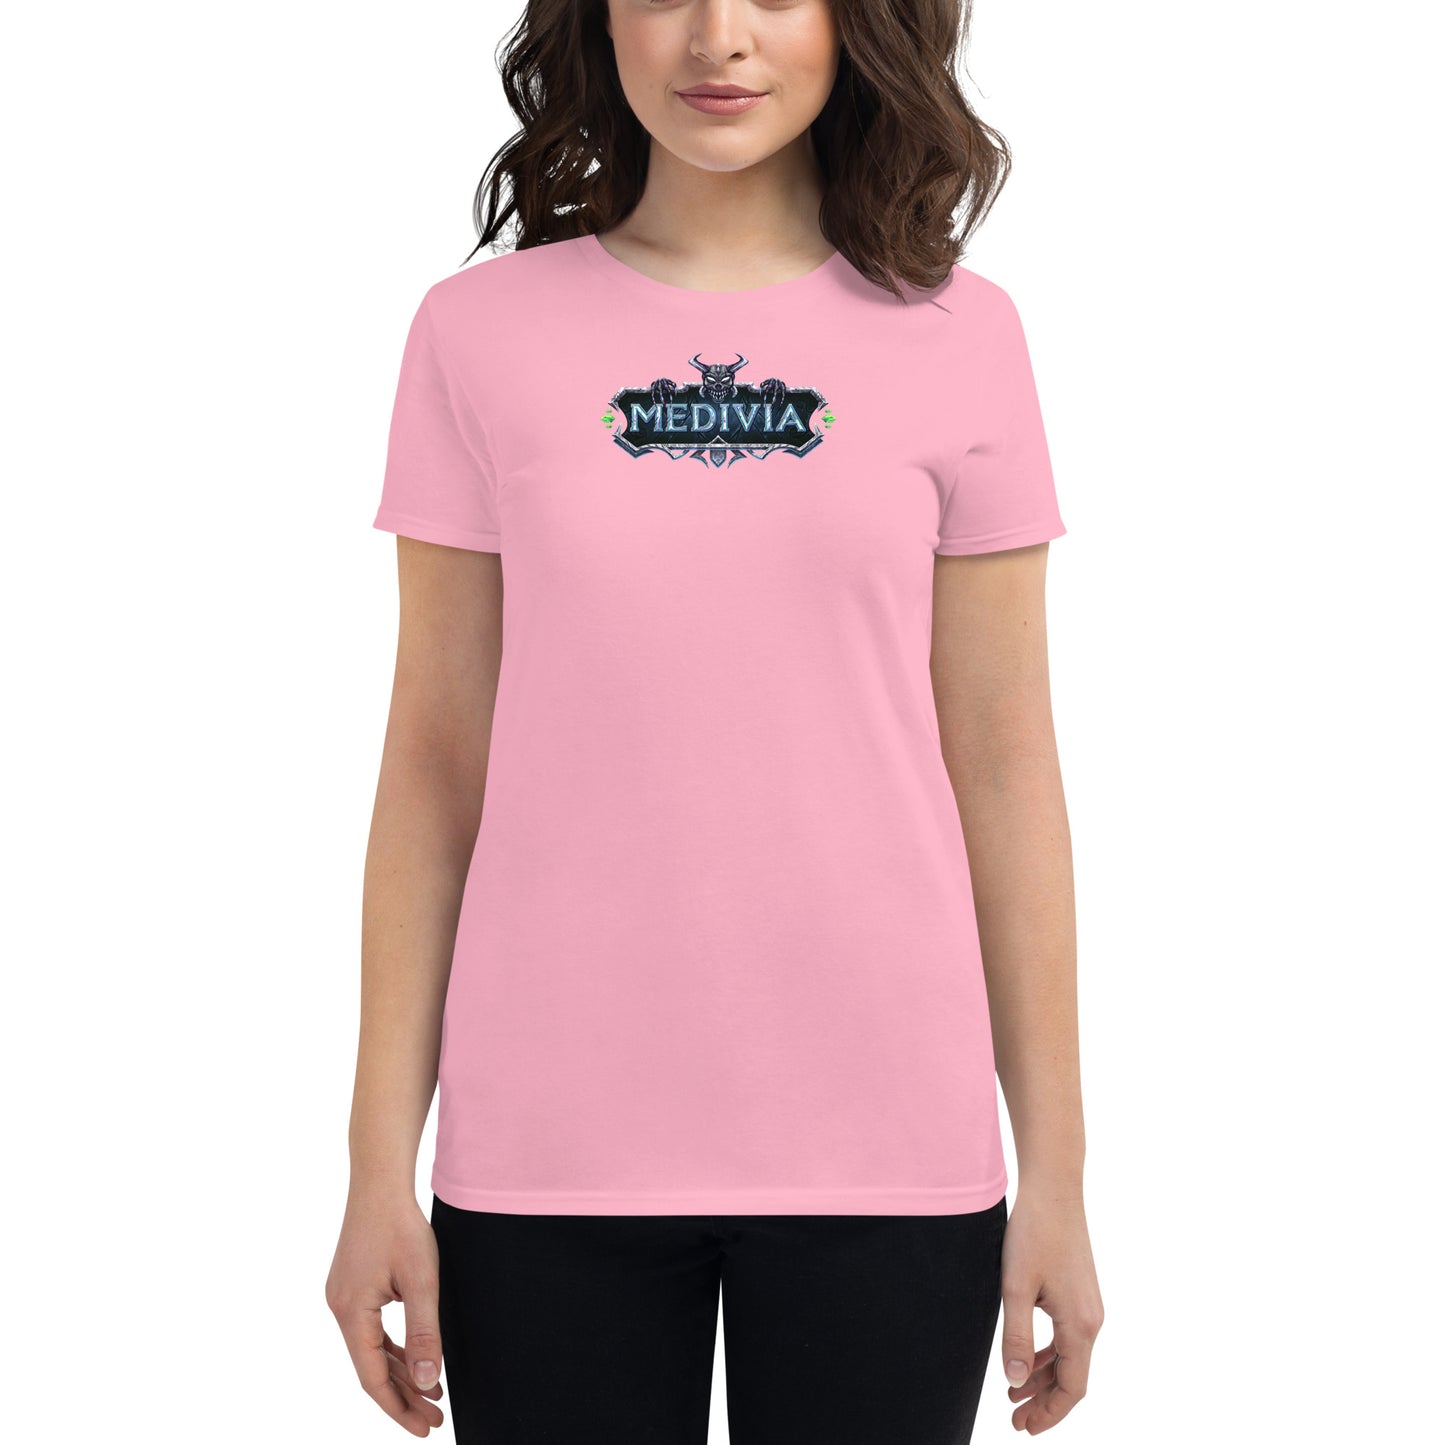 Medivia Logo Women's Fashion Fit T-Shirt